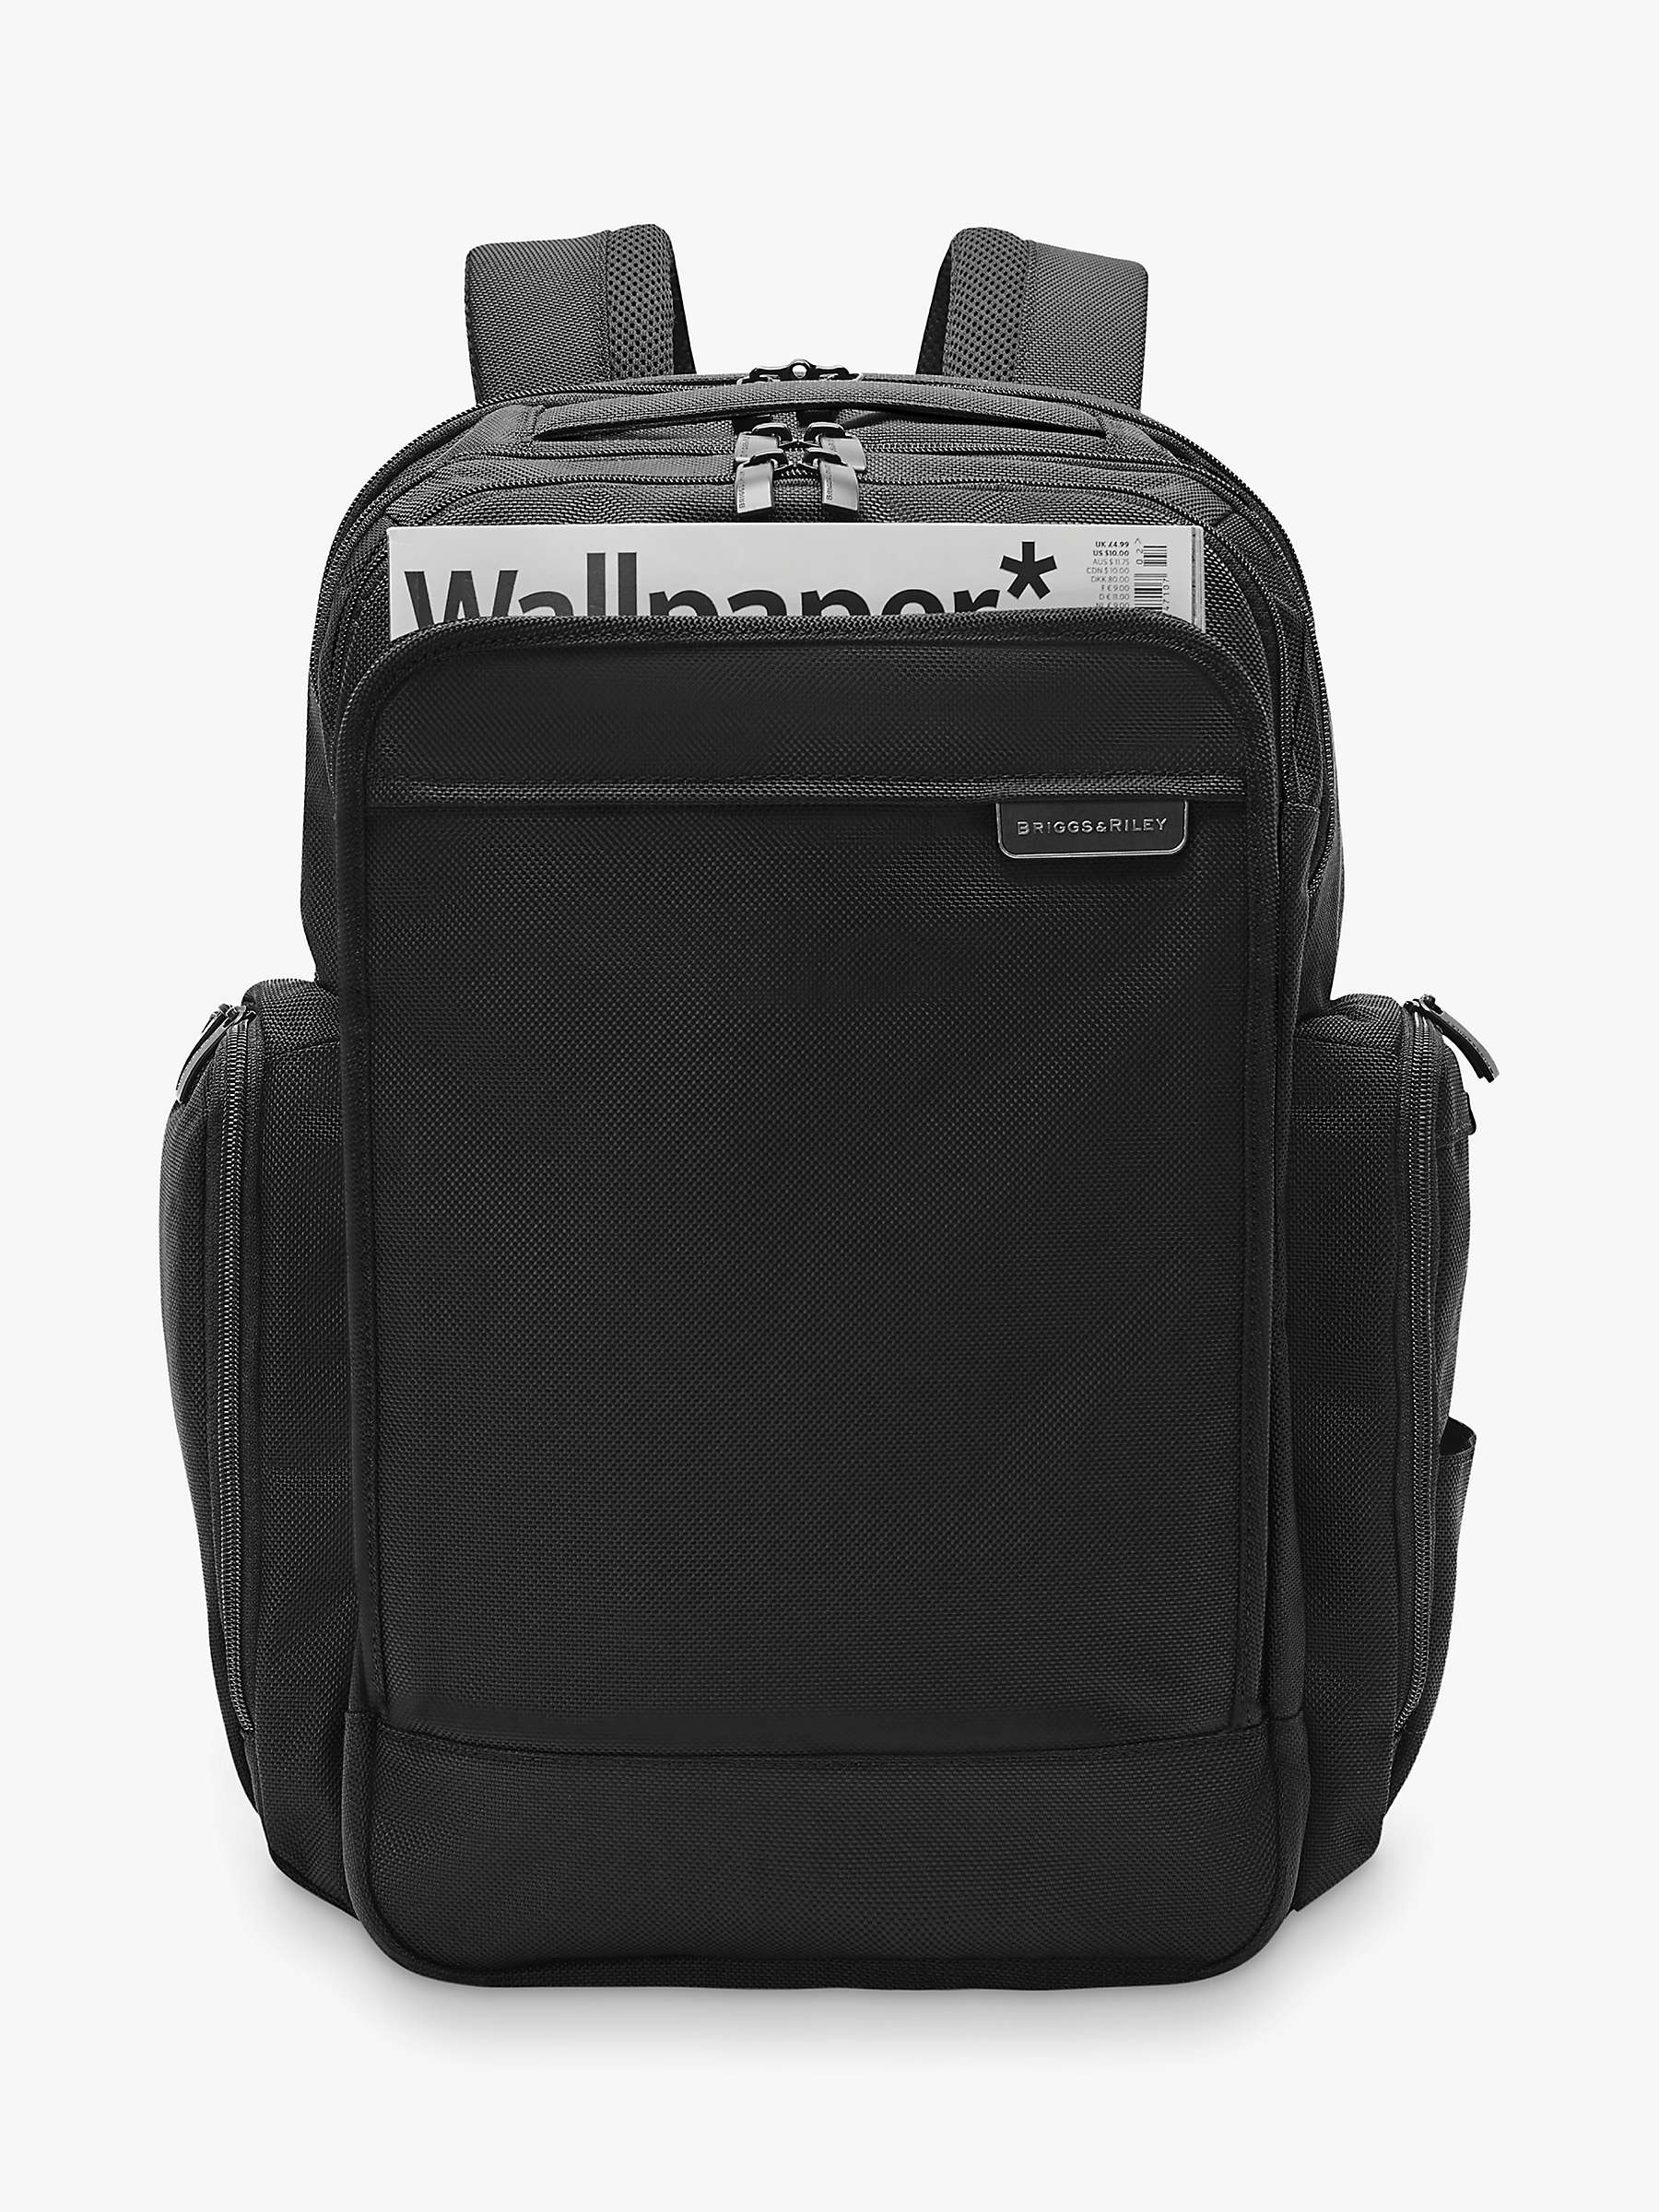 Buy Briggs & Riley Baseline Travel Backpack, Black Online at johnlewis.com